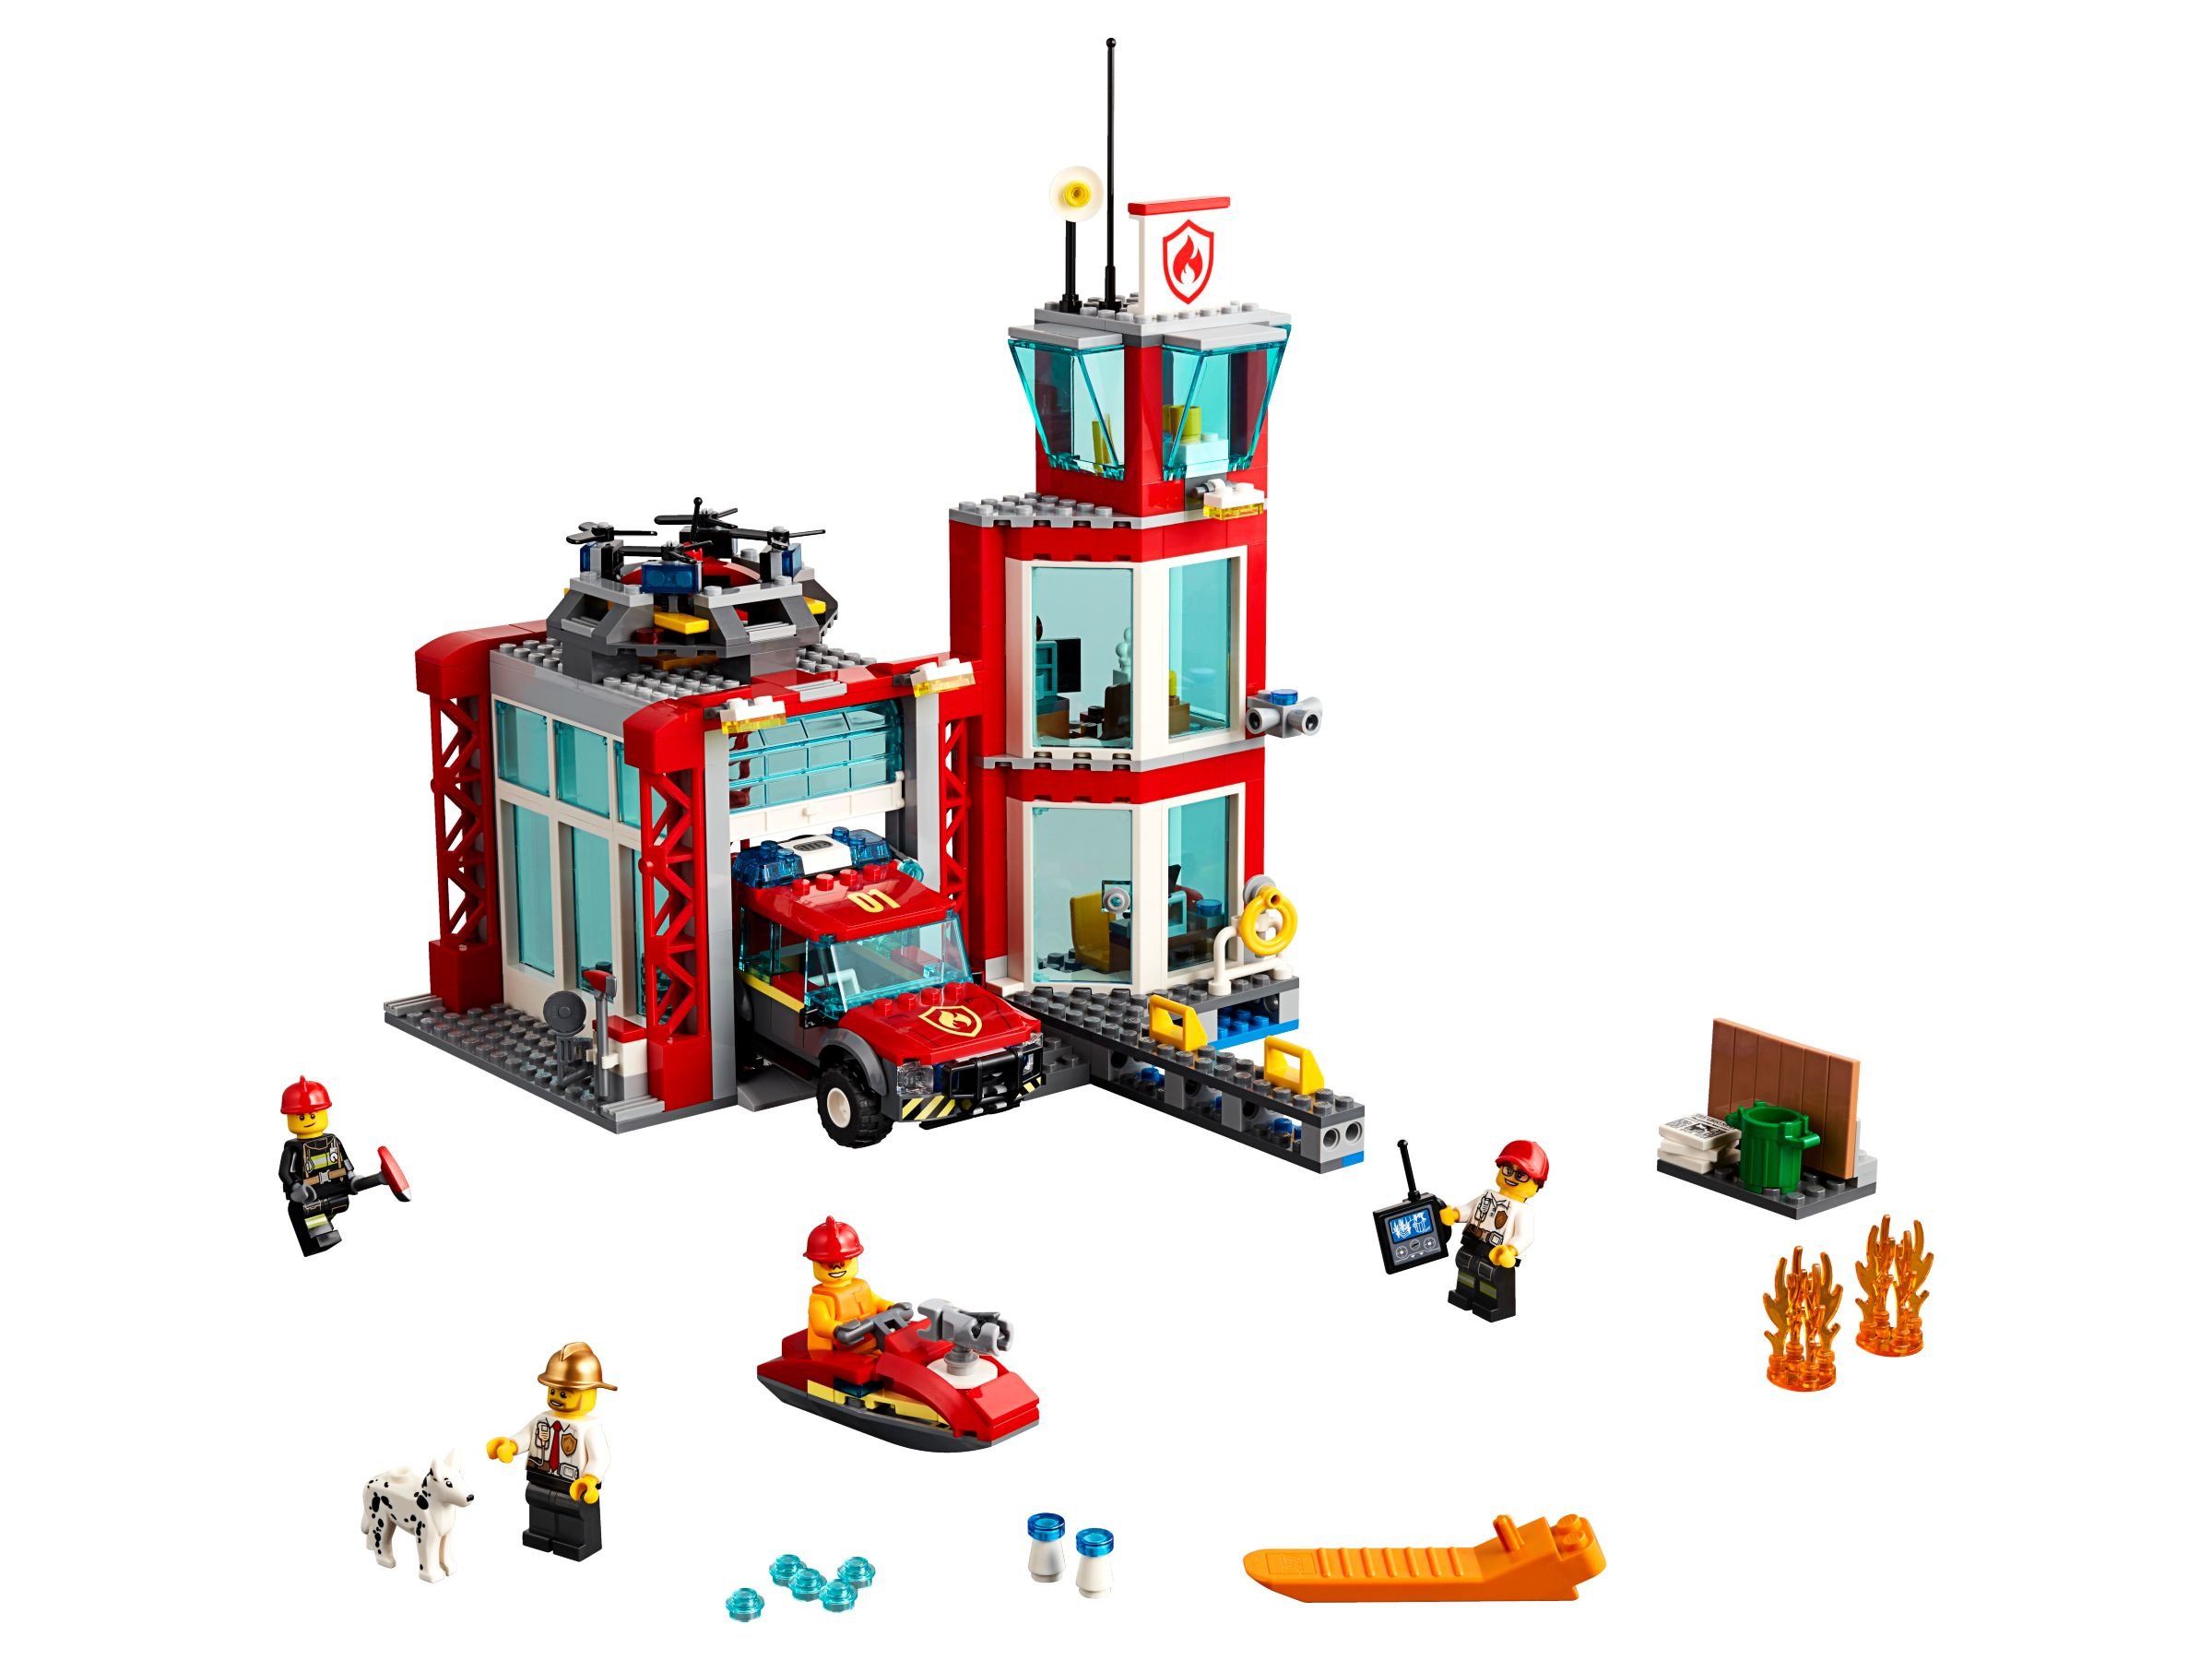 LEGO City 60215 Feuerwehrstation